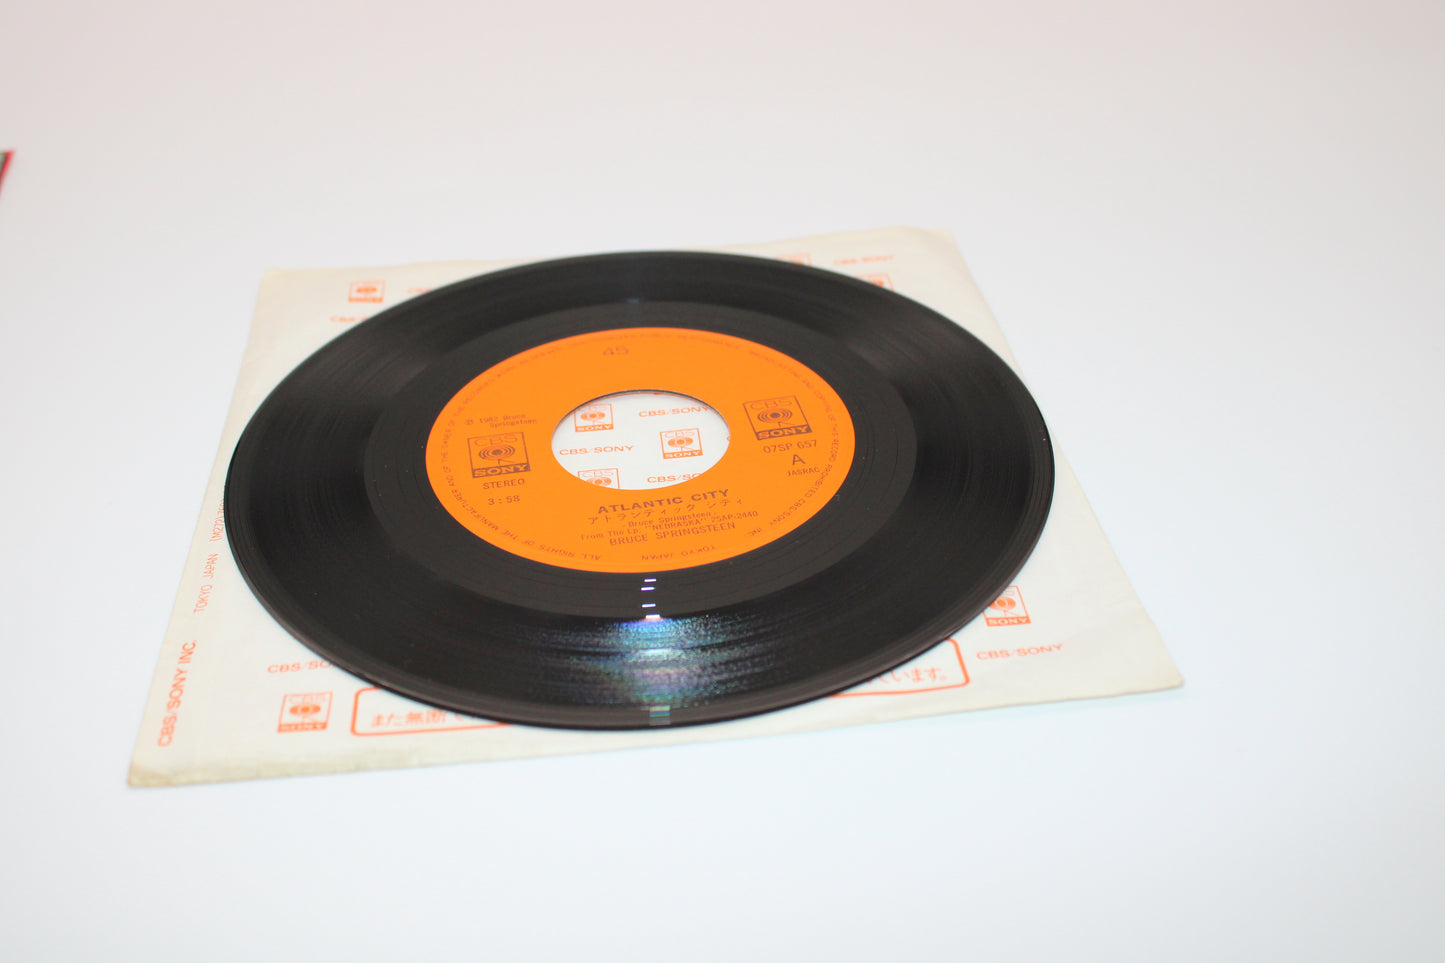 Bruce Springsteen - Atlantic City - 45 Record Import Japan 1982 Near Mint